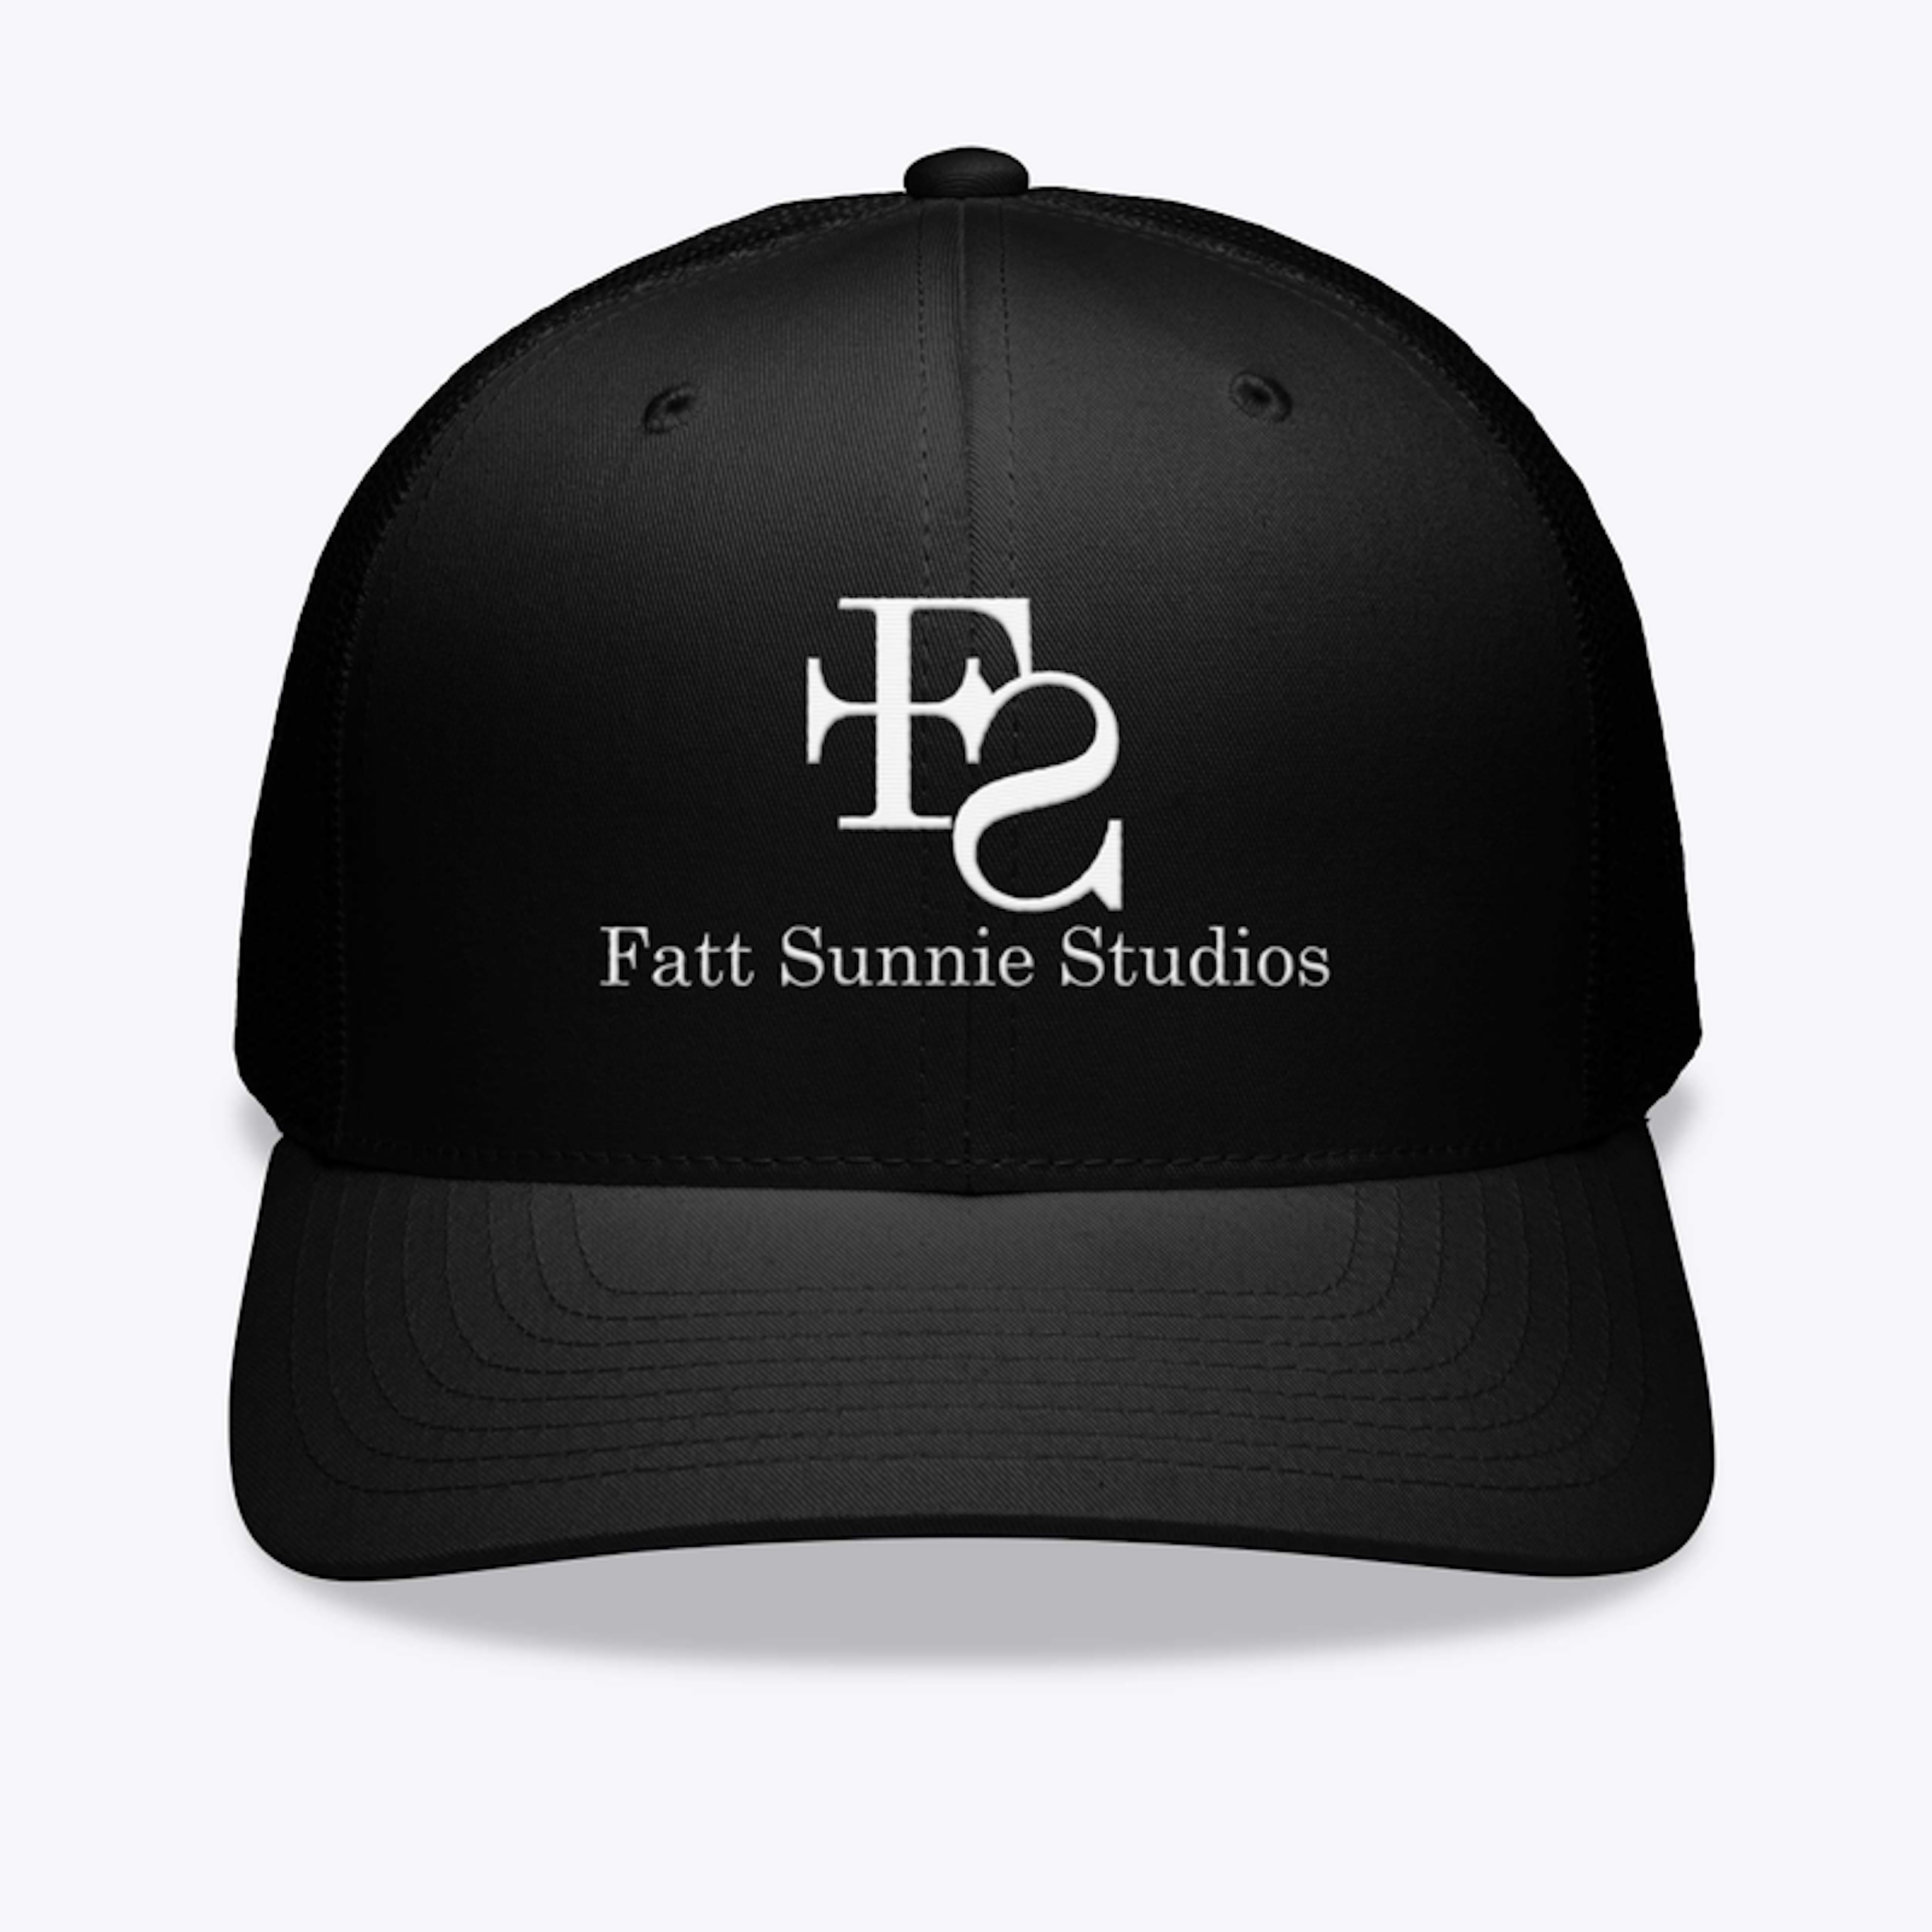  Fatt Sunnie Studios Hats